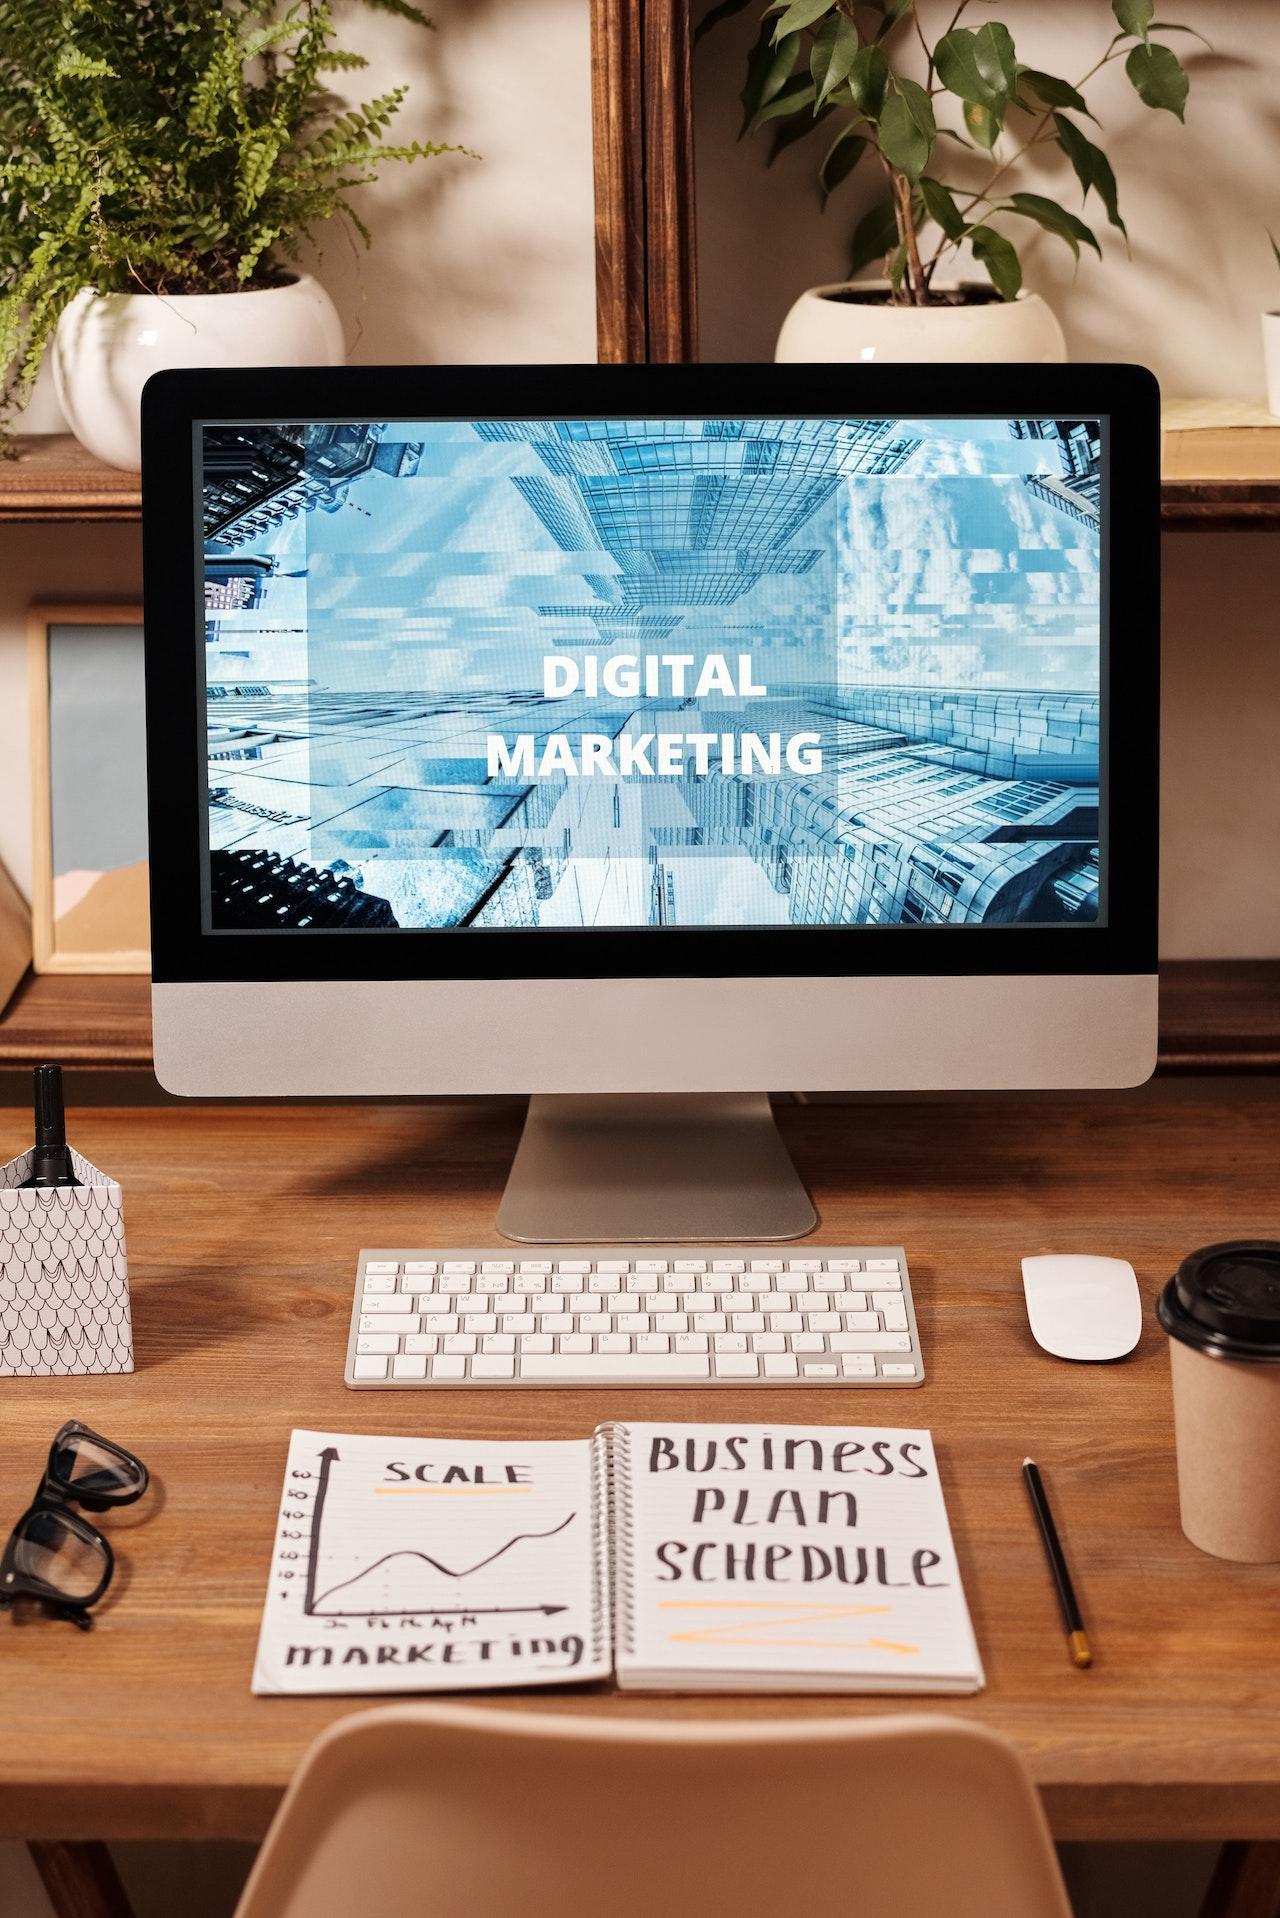 Product Digital Marketing - marketing sip image